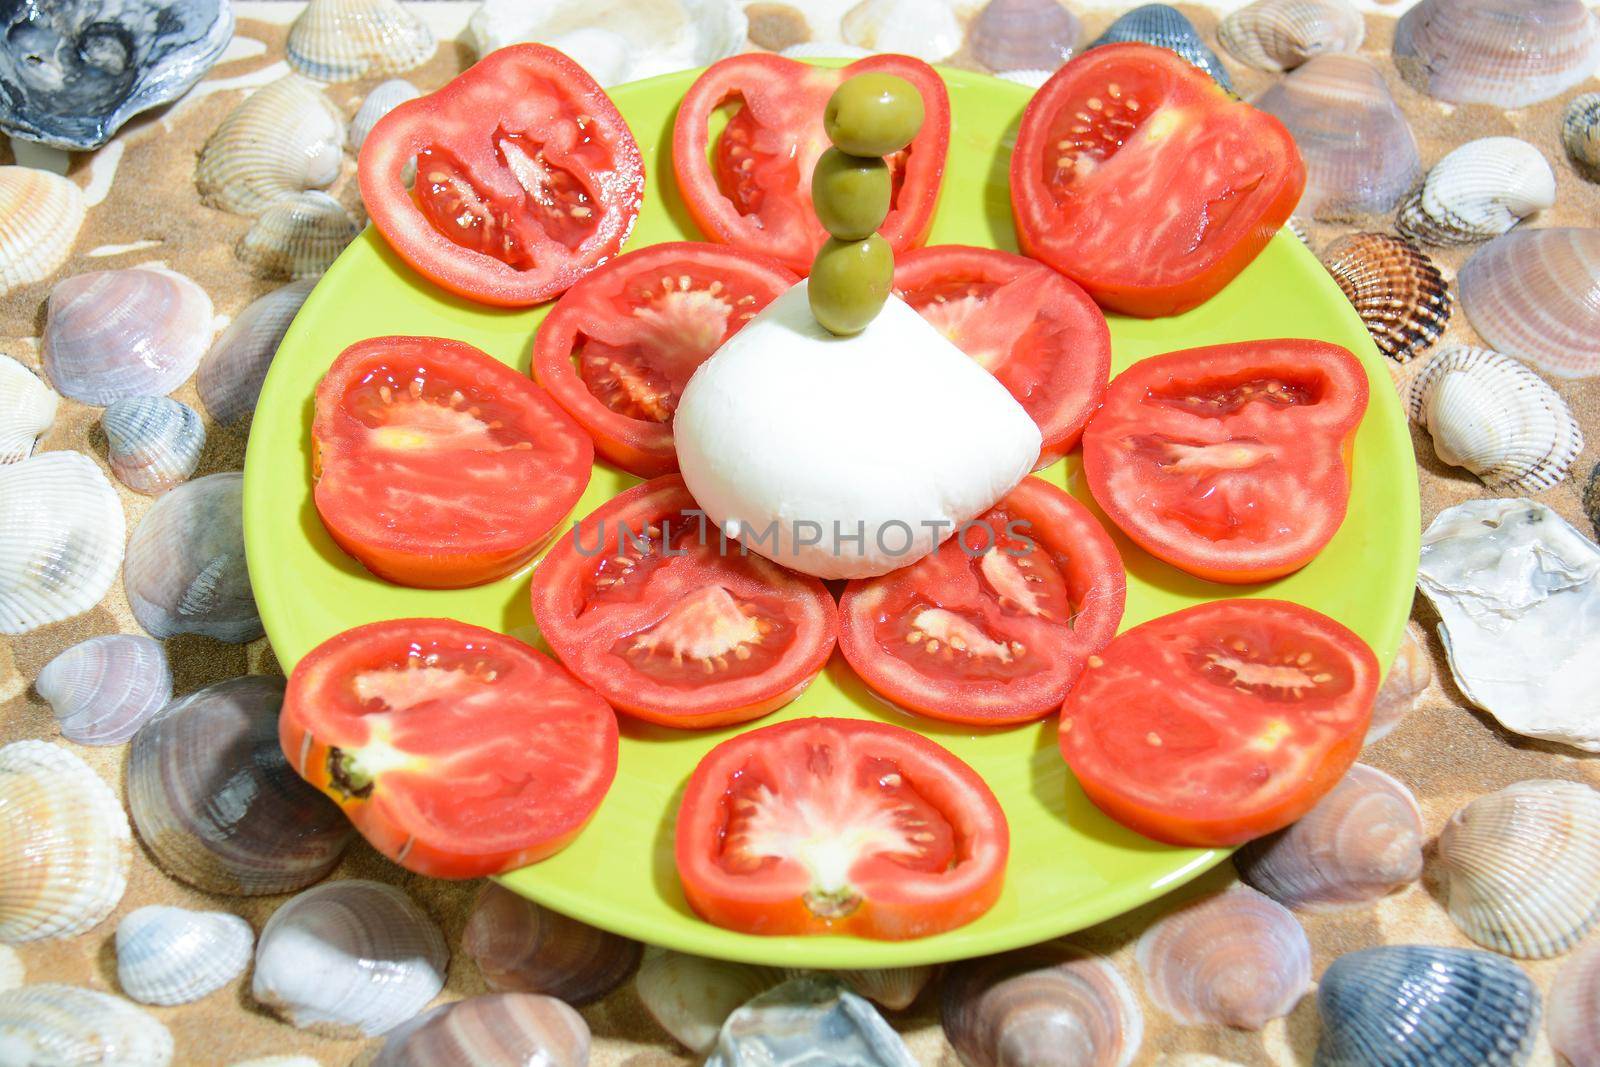 italian appetizer mozzarella cherry tomatoes oregano and oil, Italian original freshly picked tomatoes